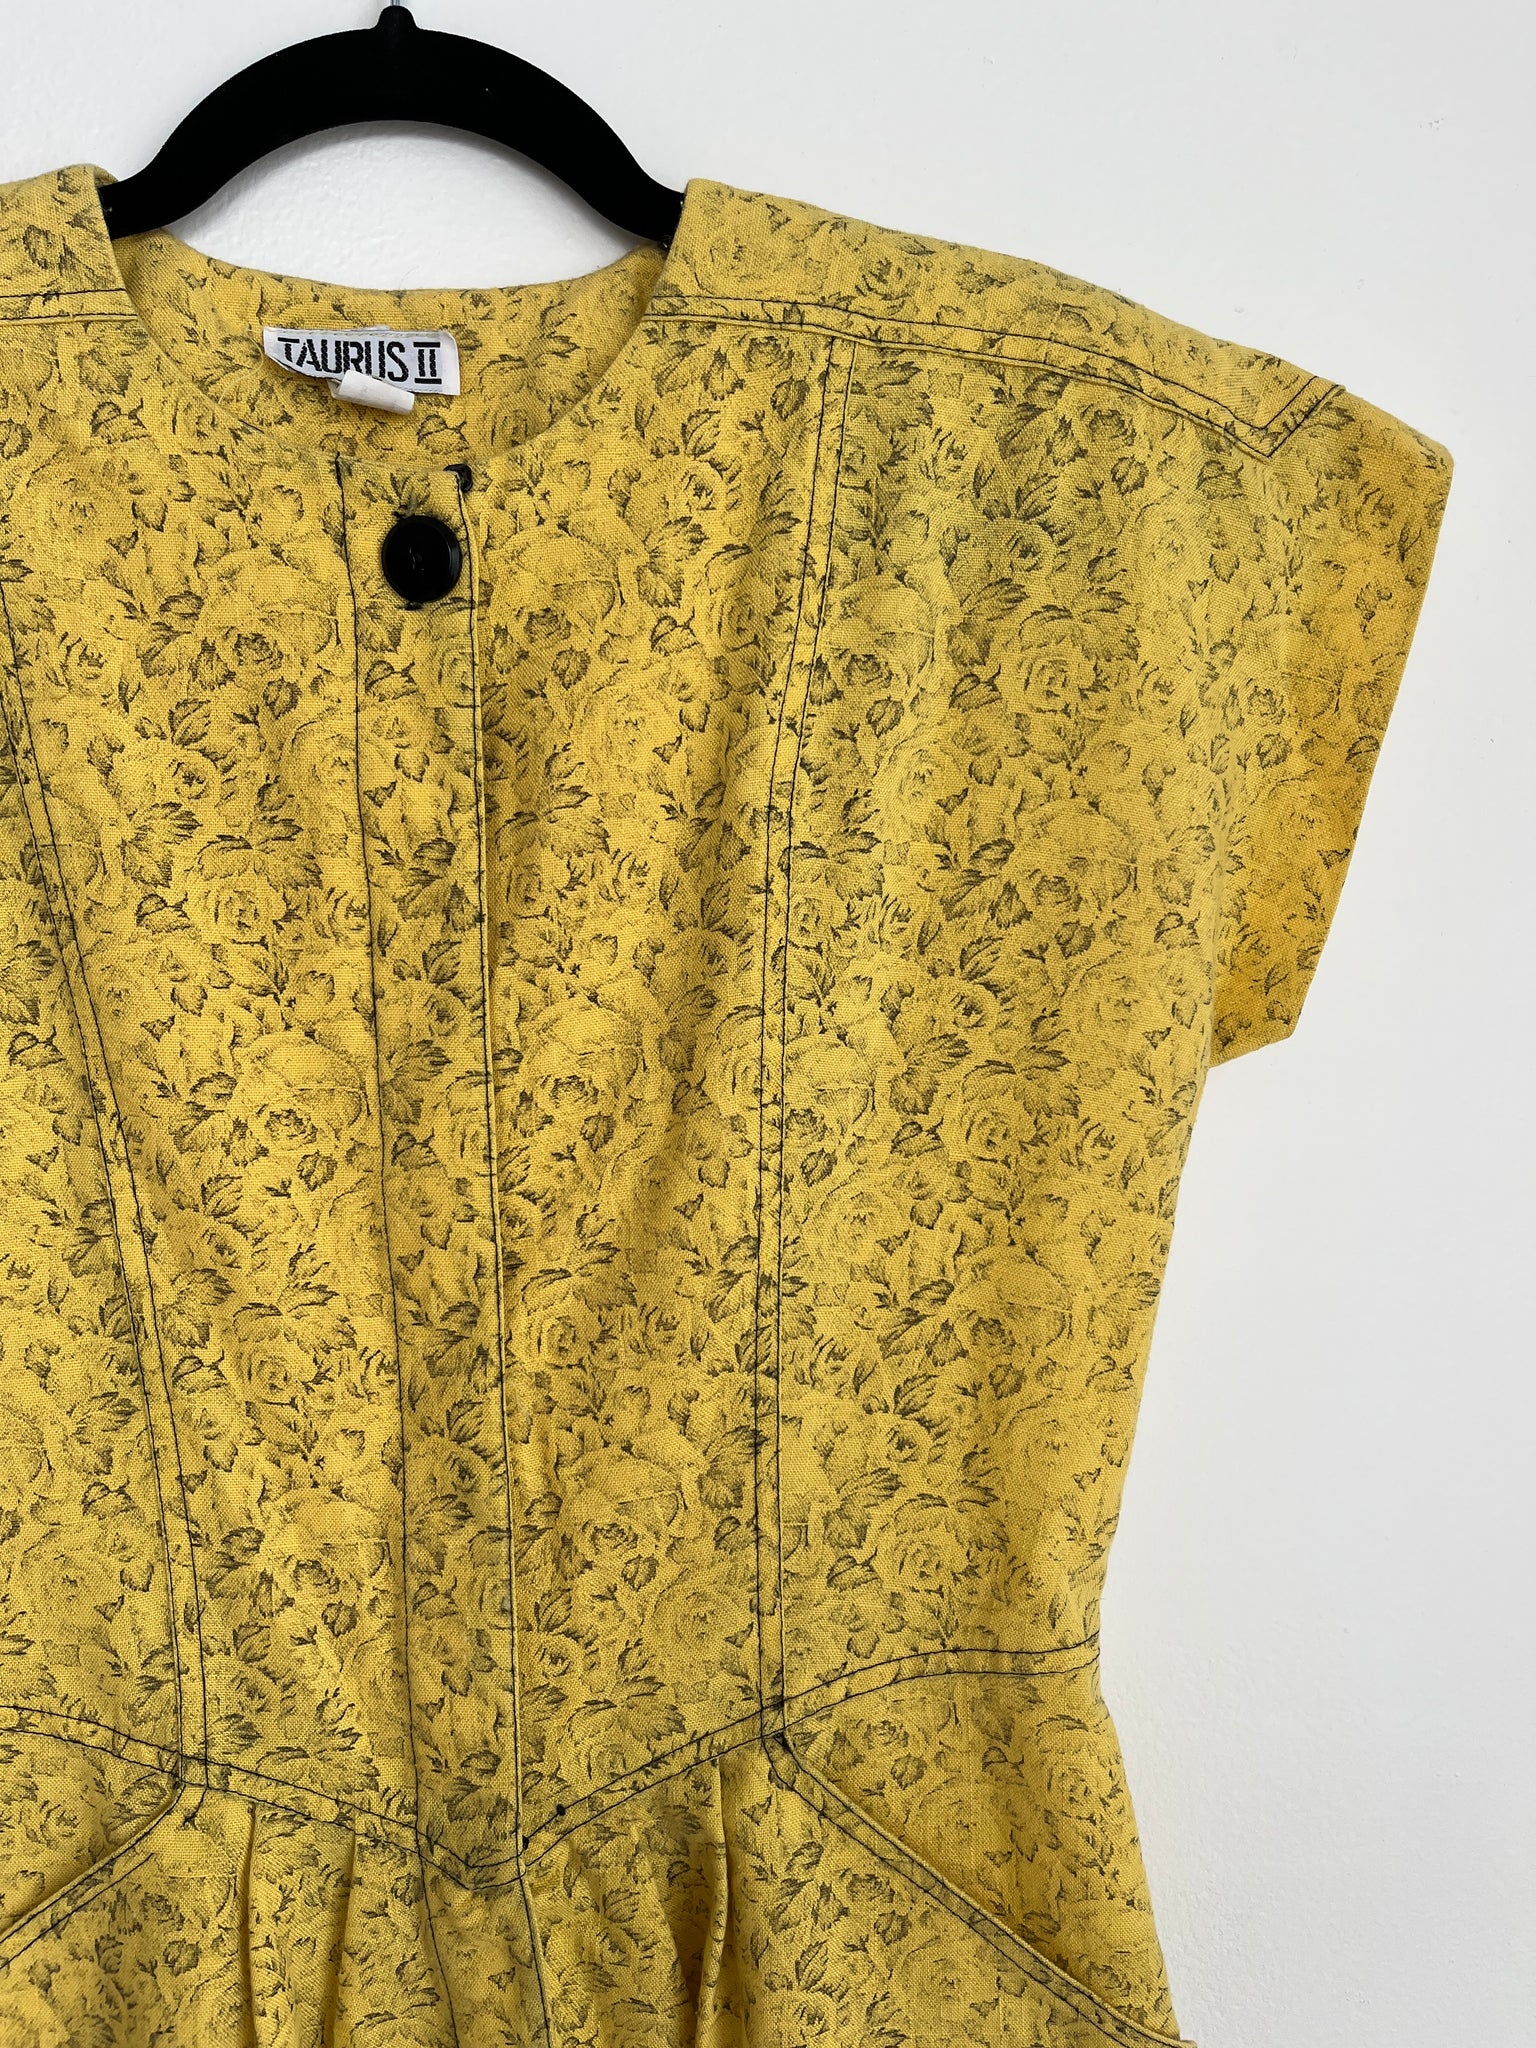 1990s DRESS- Taurus II yellow linen look w/ floral print